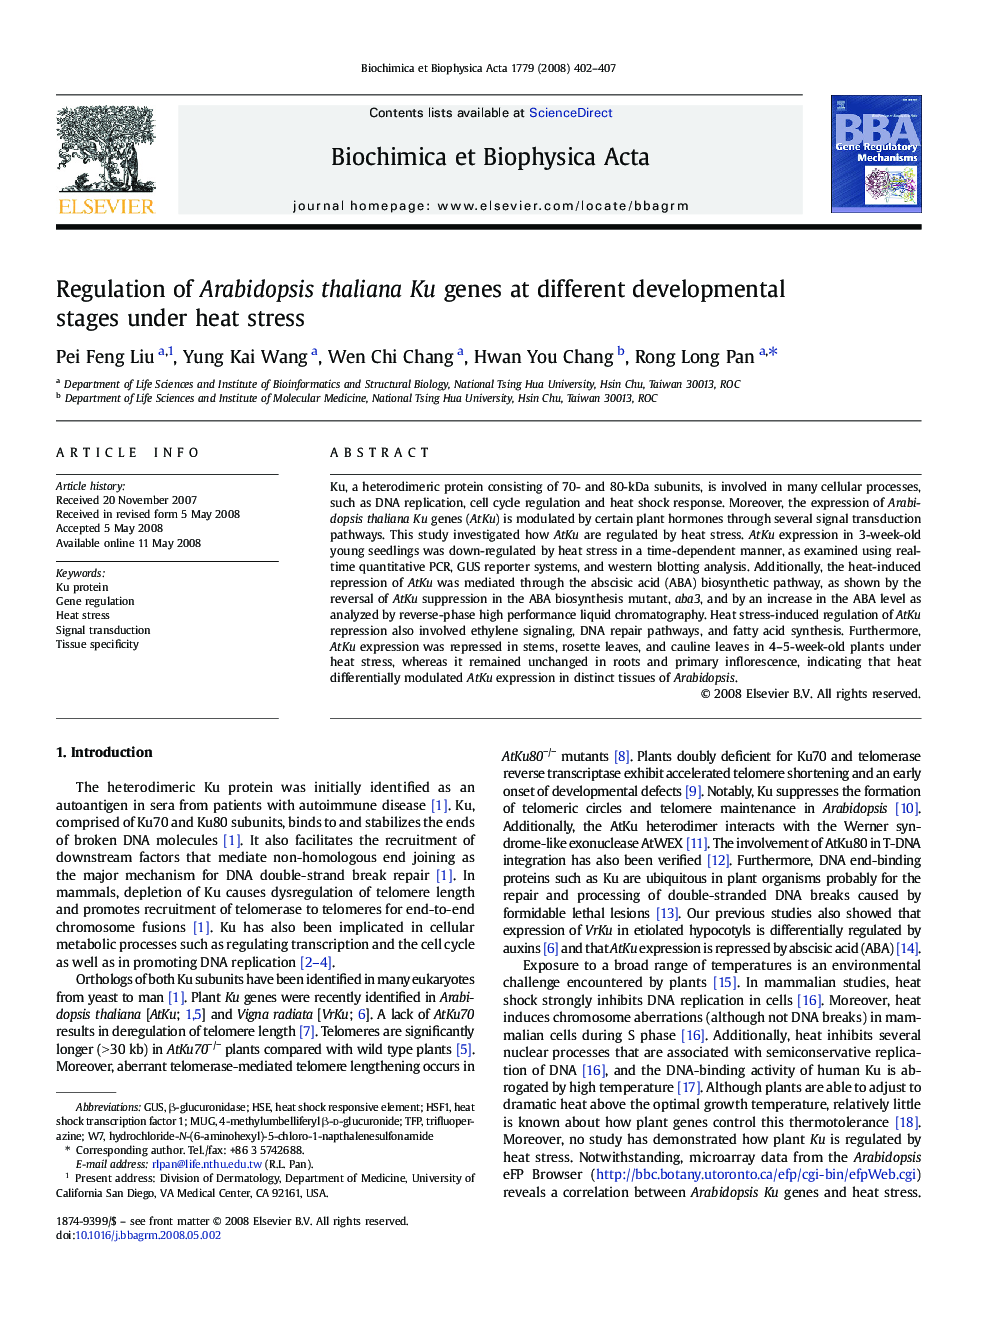 Regulation of Arabidopsis thaliana Ku genes at different developmental stages under heat stress